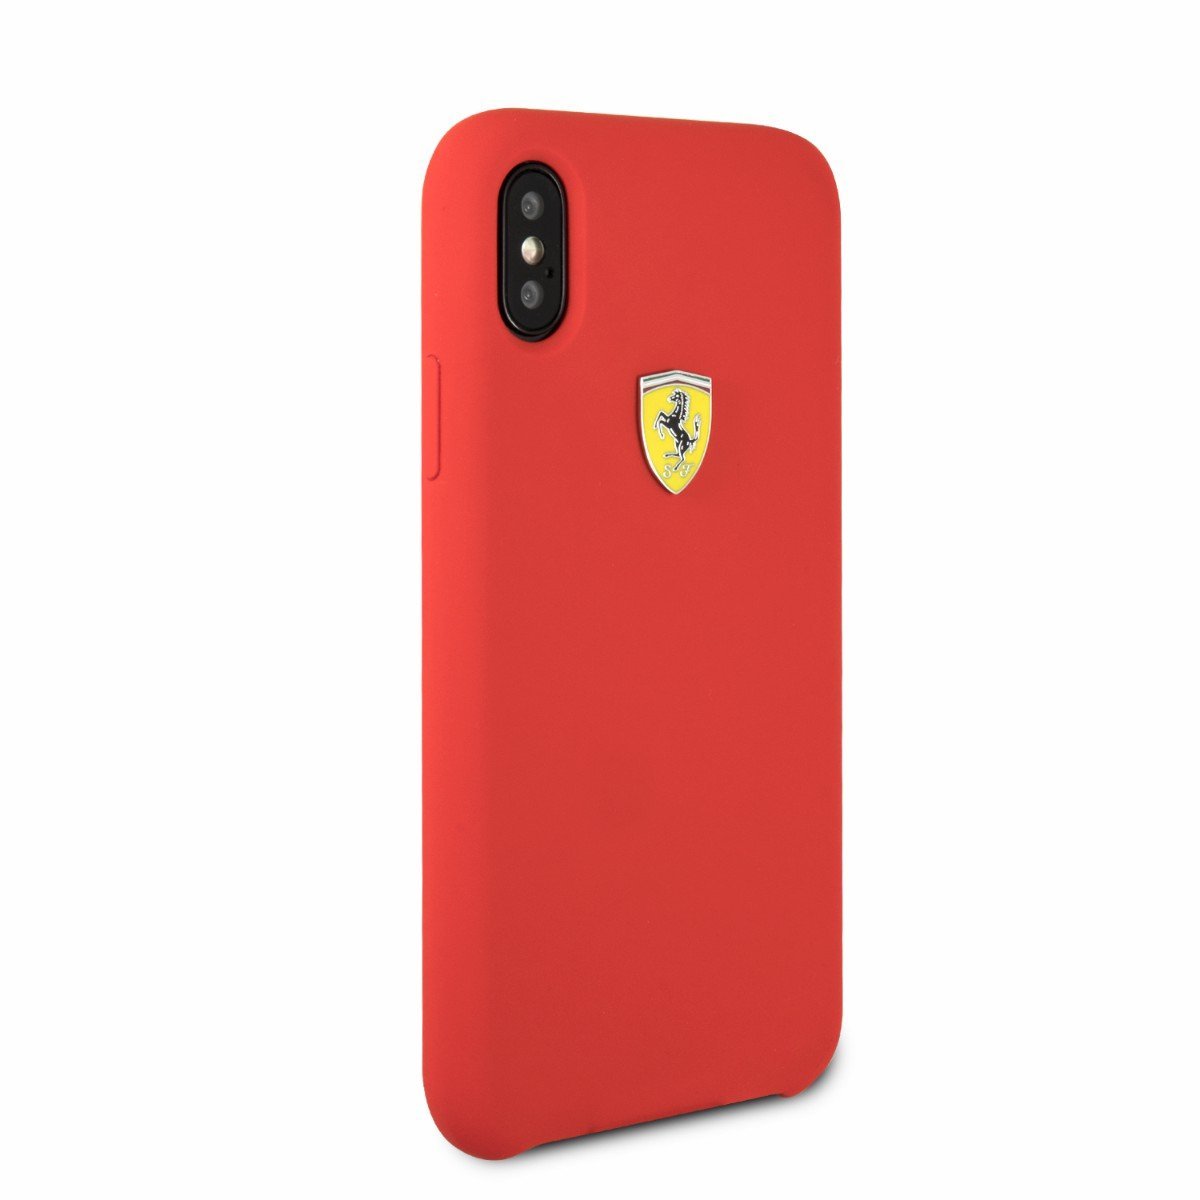 Funda Silicón Iphone X Roja Ferrari